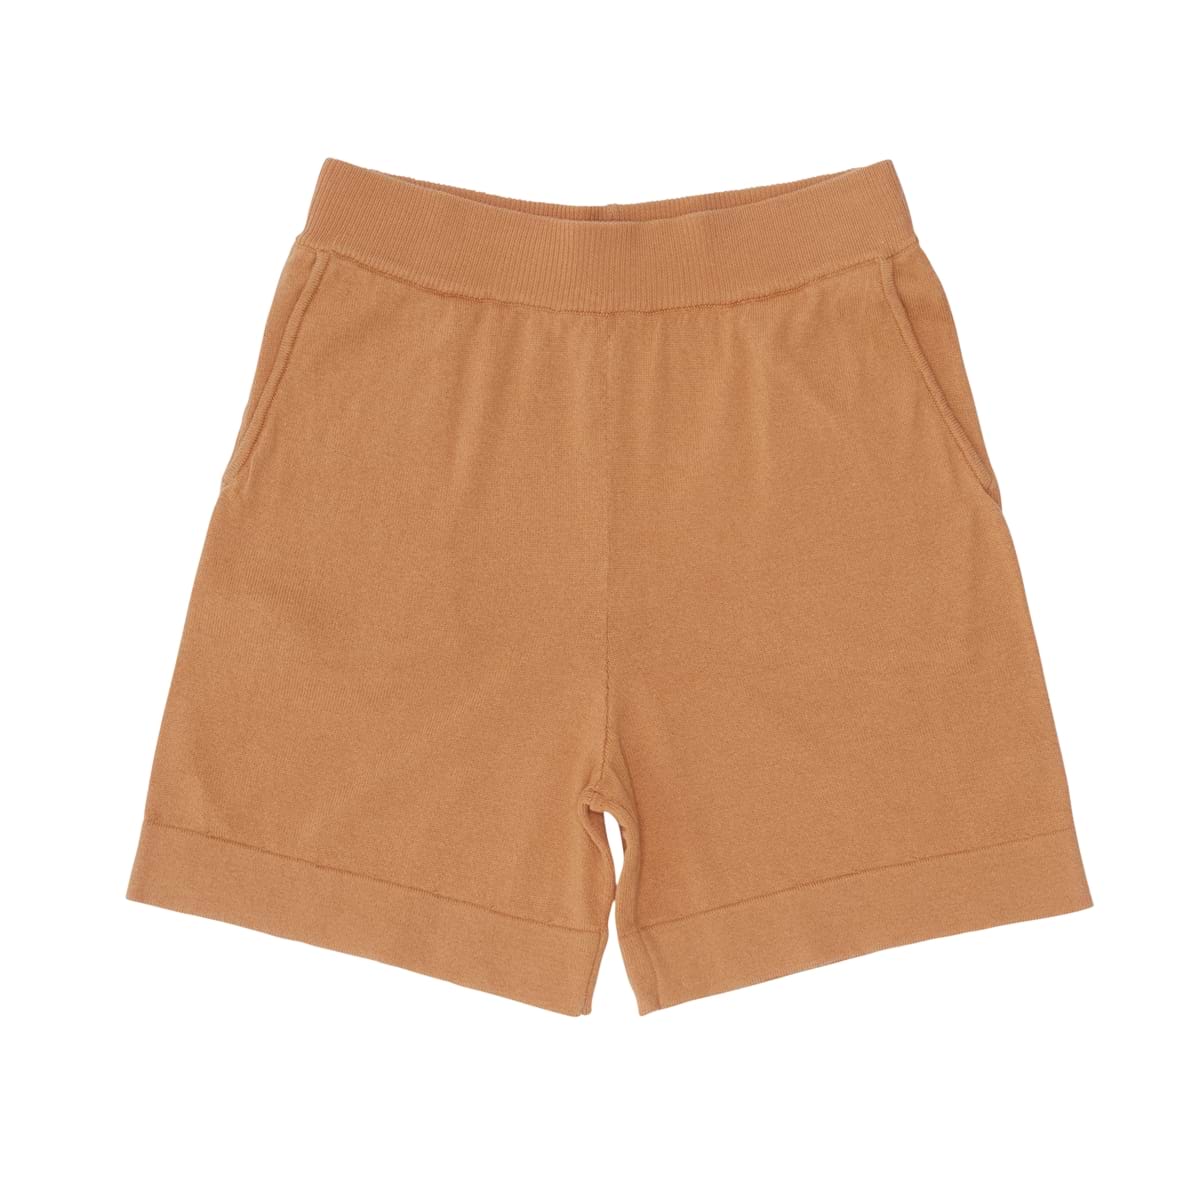 FUB Shorts, Apricot